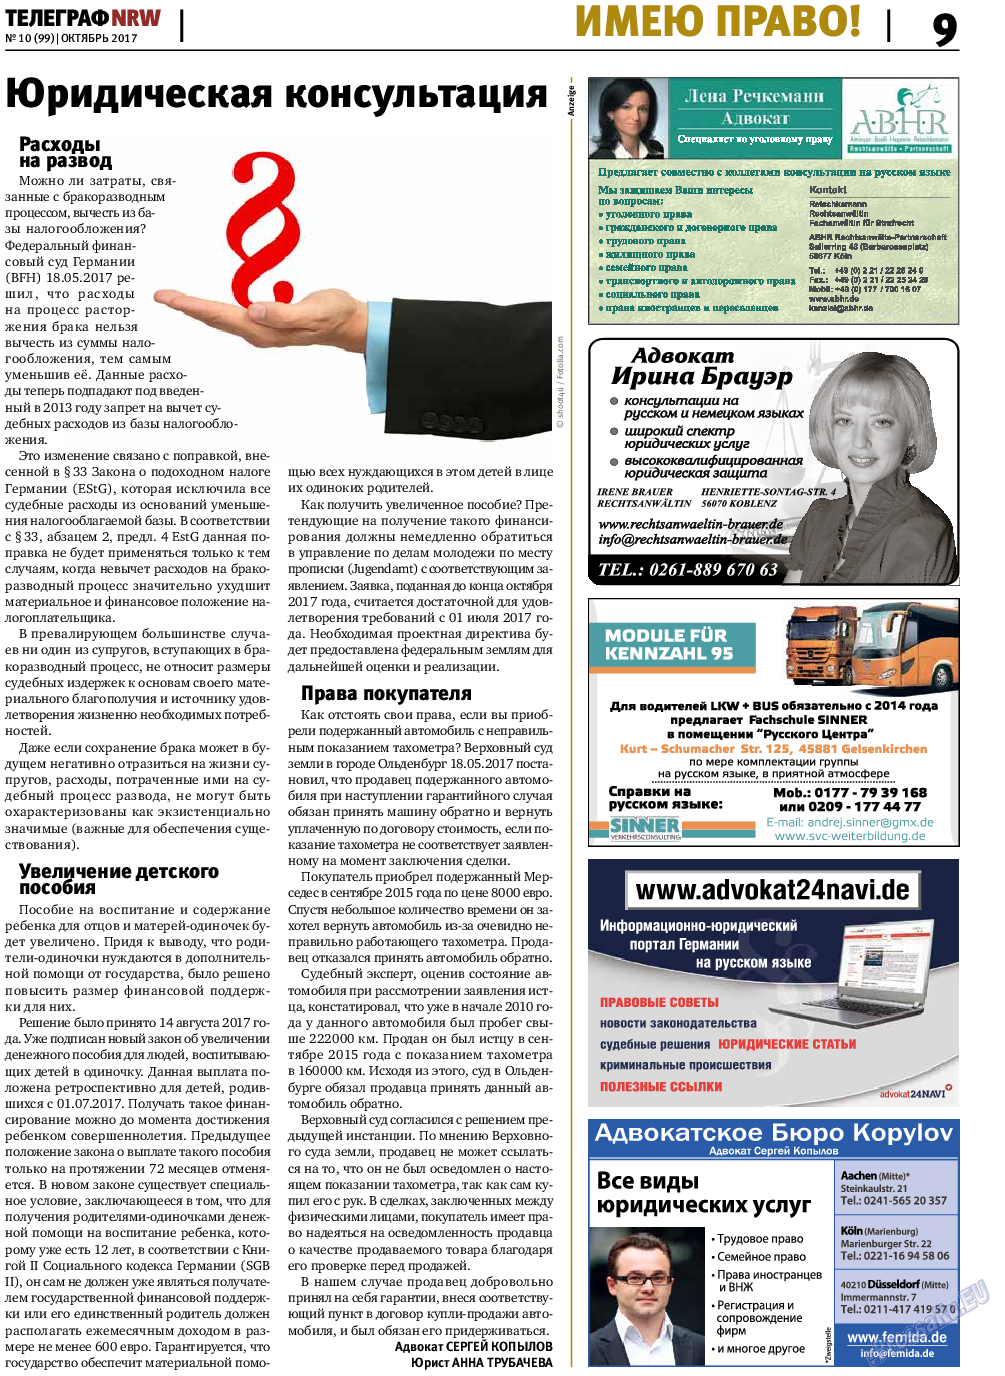 Телеграф NRW, газета. 2017 №10 стр.9